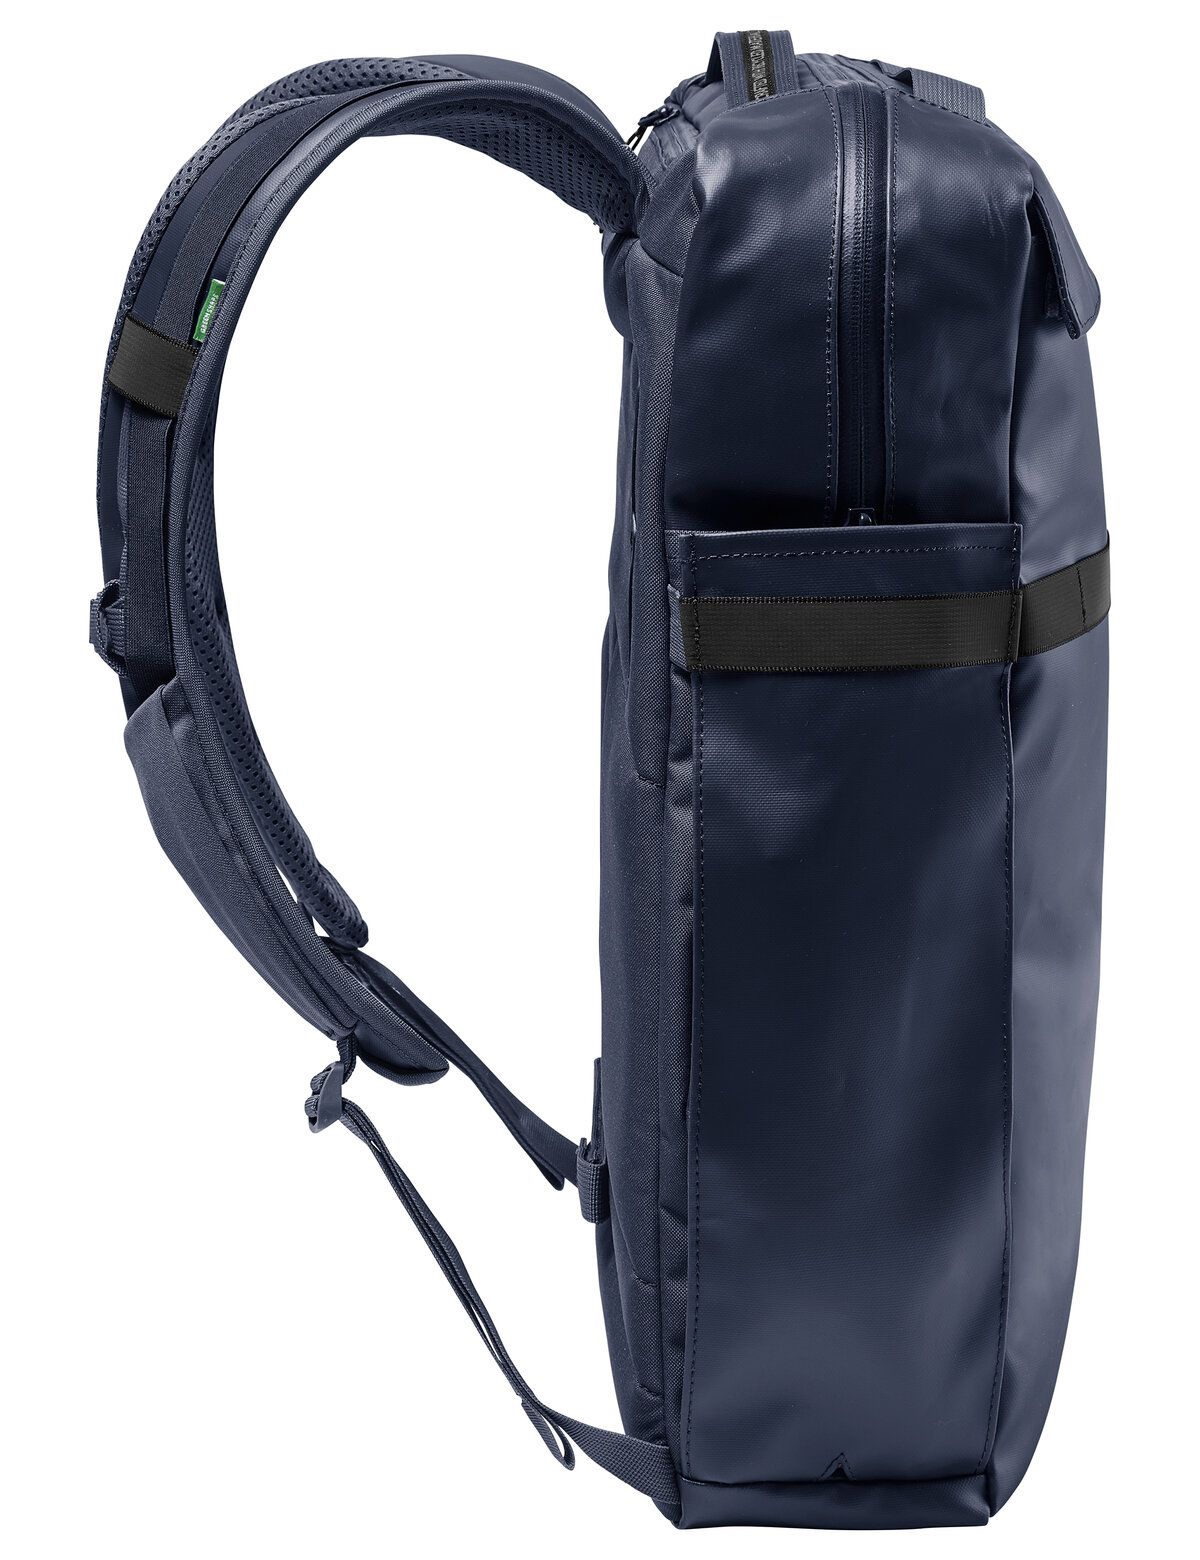 Vaude  Mineo Transformer Backpack 20 - 2in1 Fahrradtaschen-Rucksack - Navy (Eclipse)